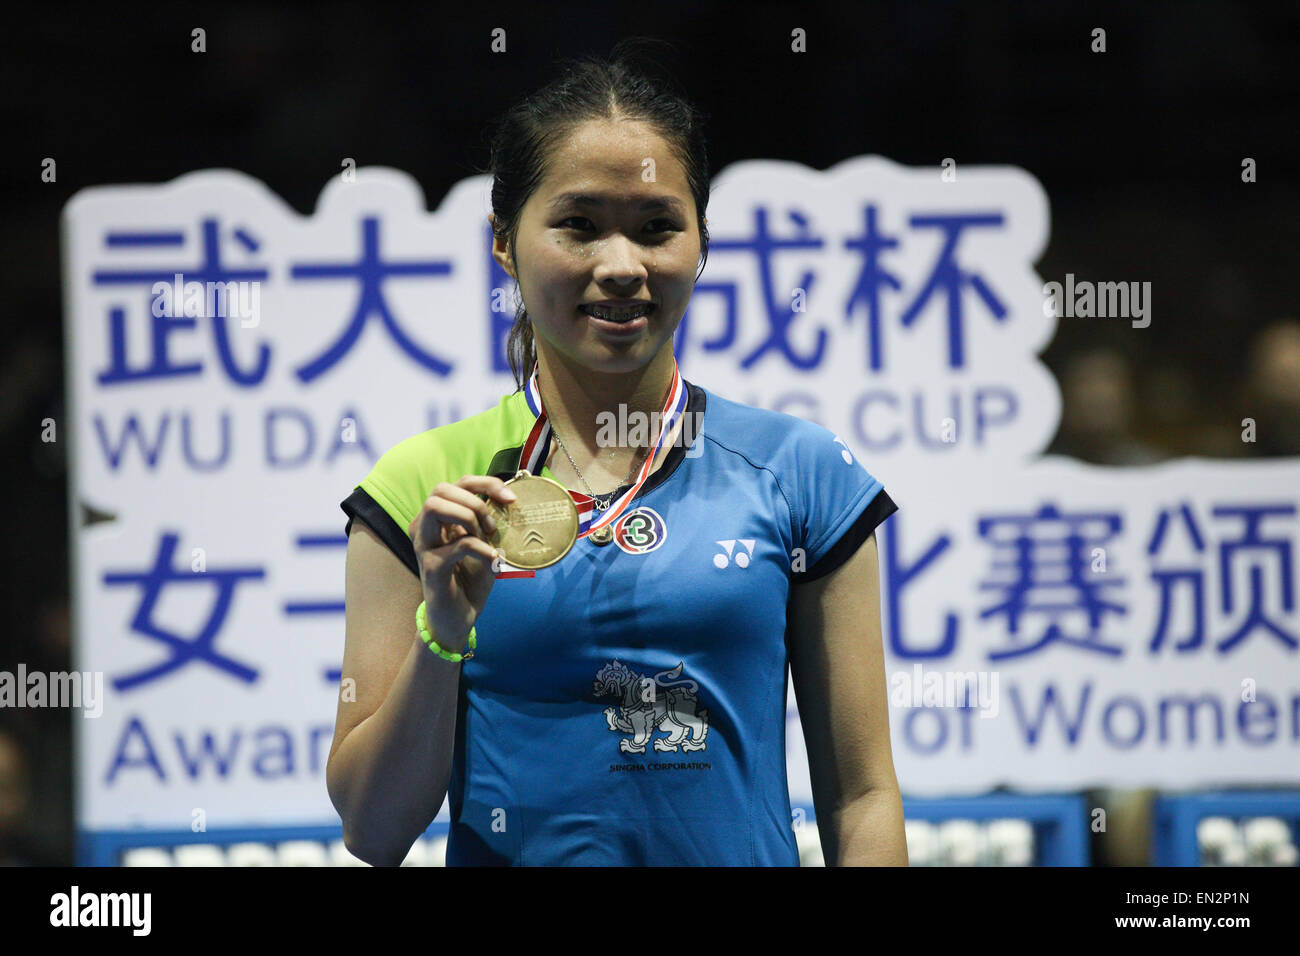 Dong Feng Citroen Badminton Asia Championships 2015 in Wuhan, China am 26. April 2015. Ratchanok Intanon behauptete den Titel durch besiegen Li Xuerui von China im Finale. Stockfoto